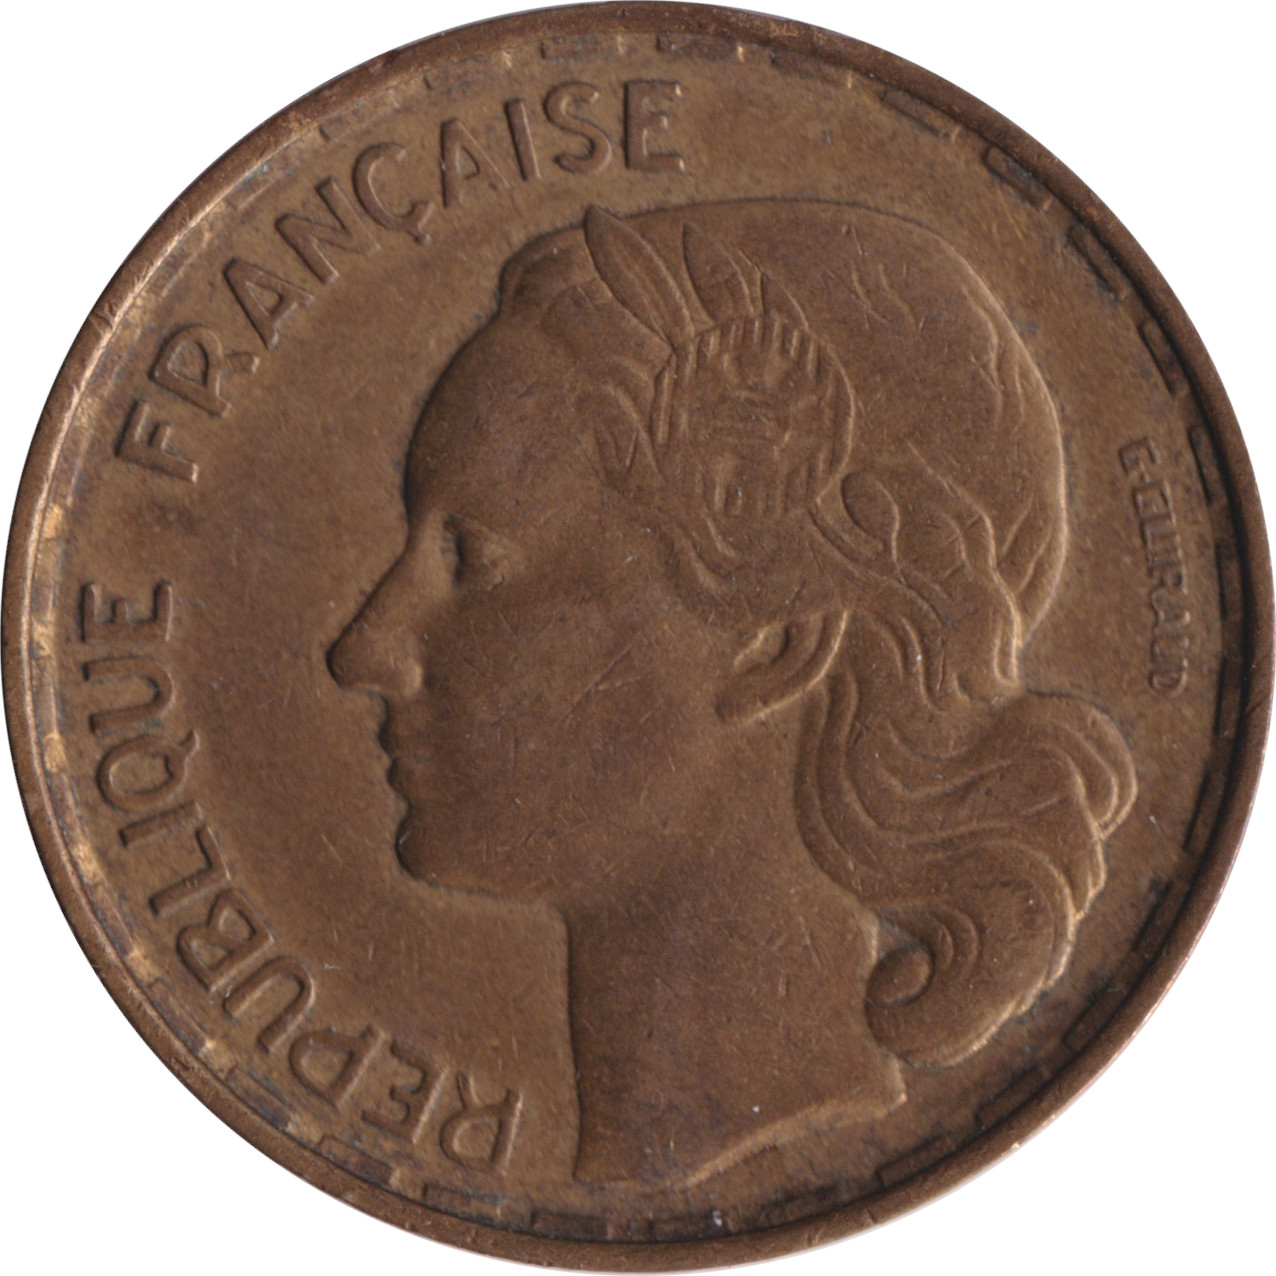 50 francs - Guiraud